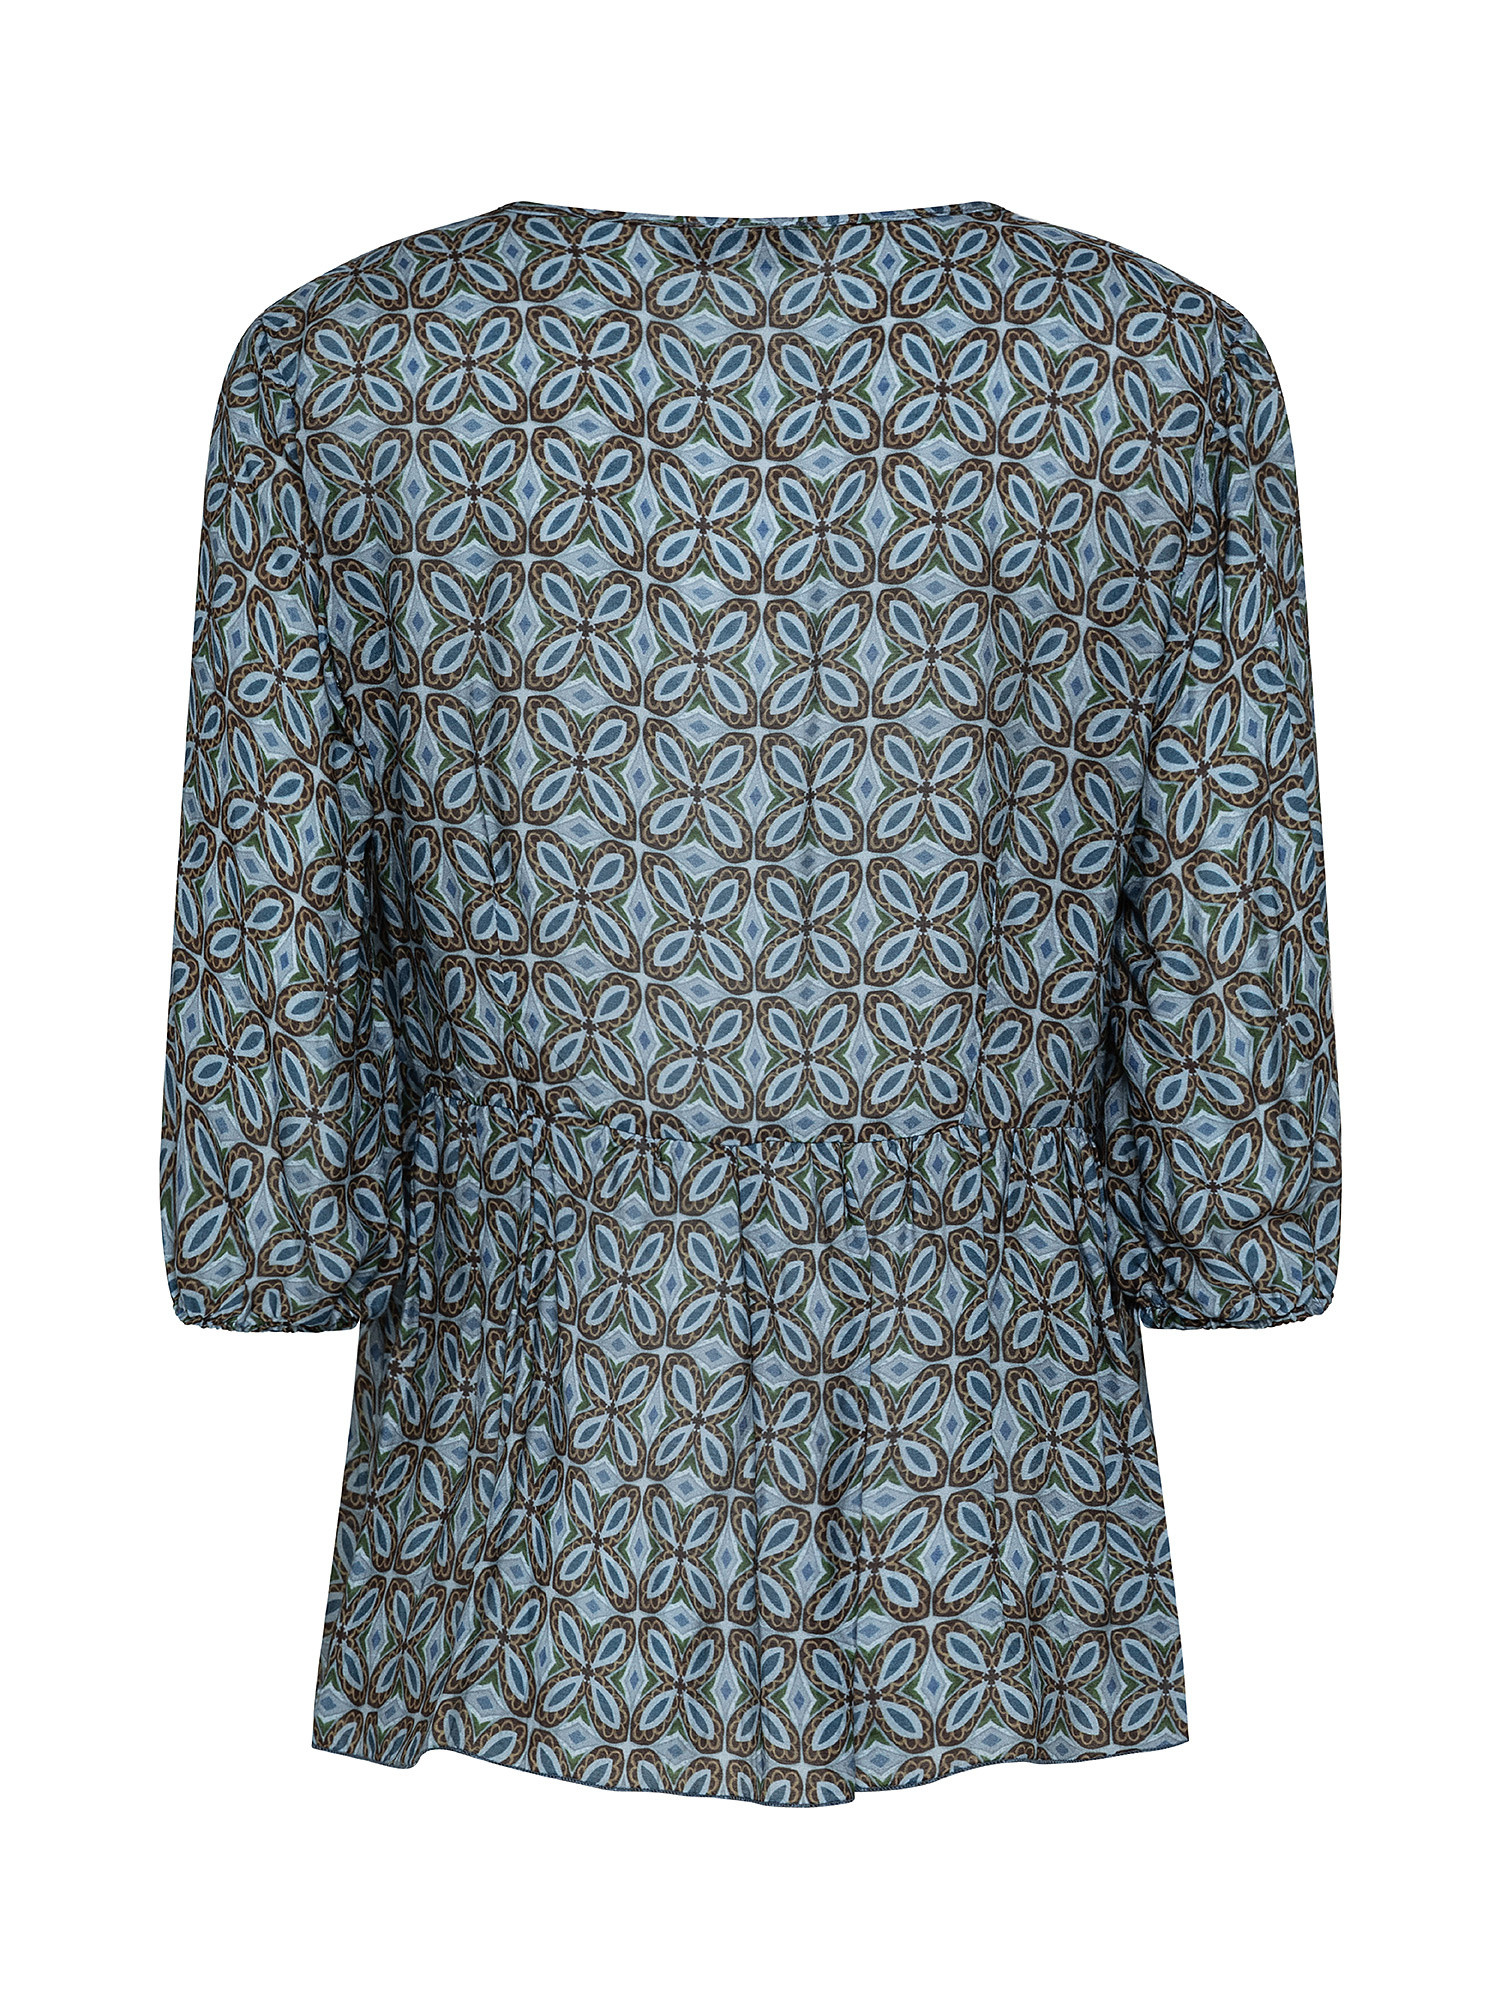 Printed blouse, Blue, large image number 1